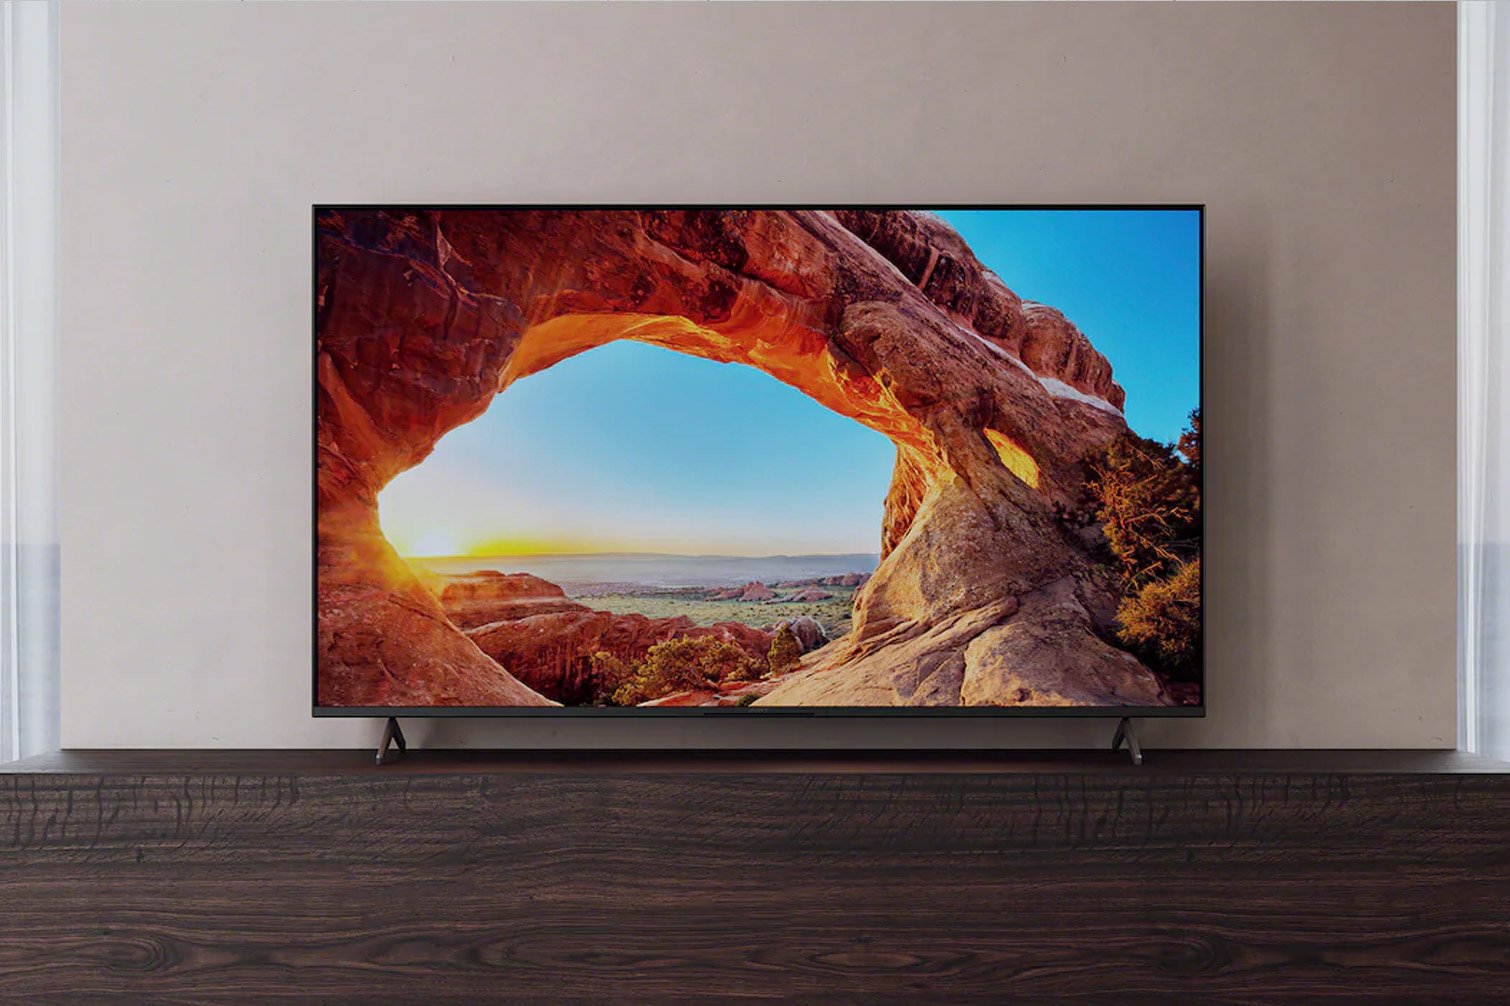 Smart Tivi 4K Sony KD-65X86J 65 inch Google TV